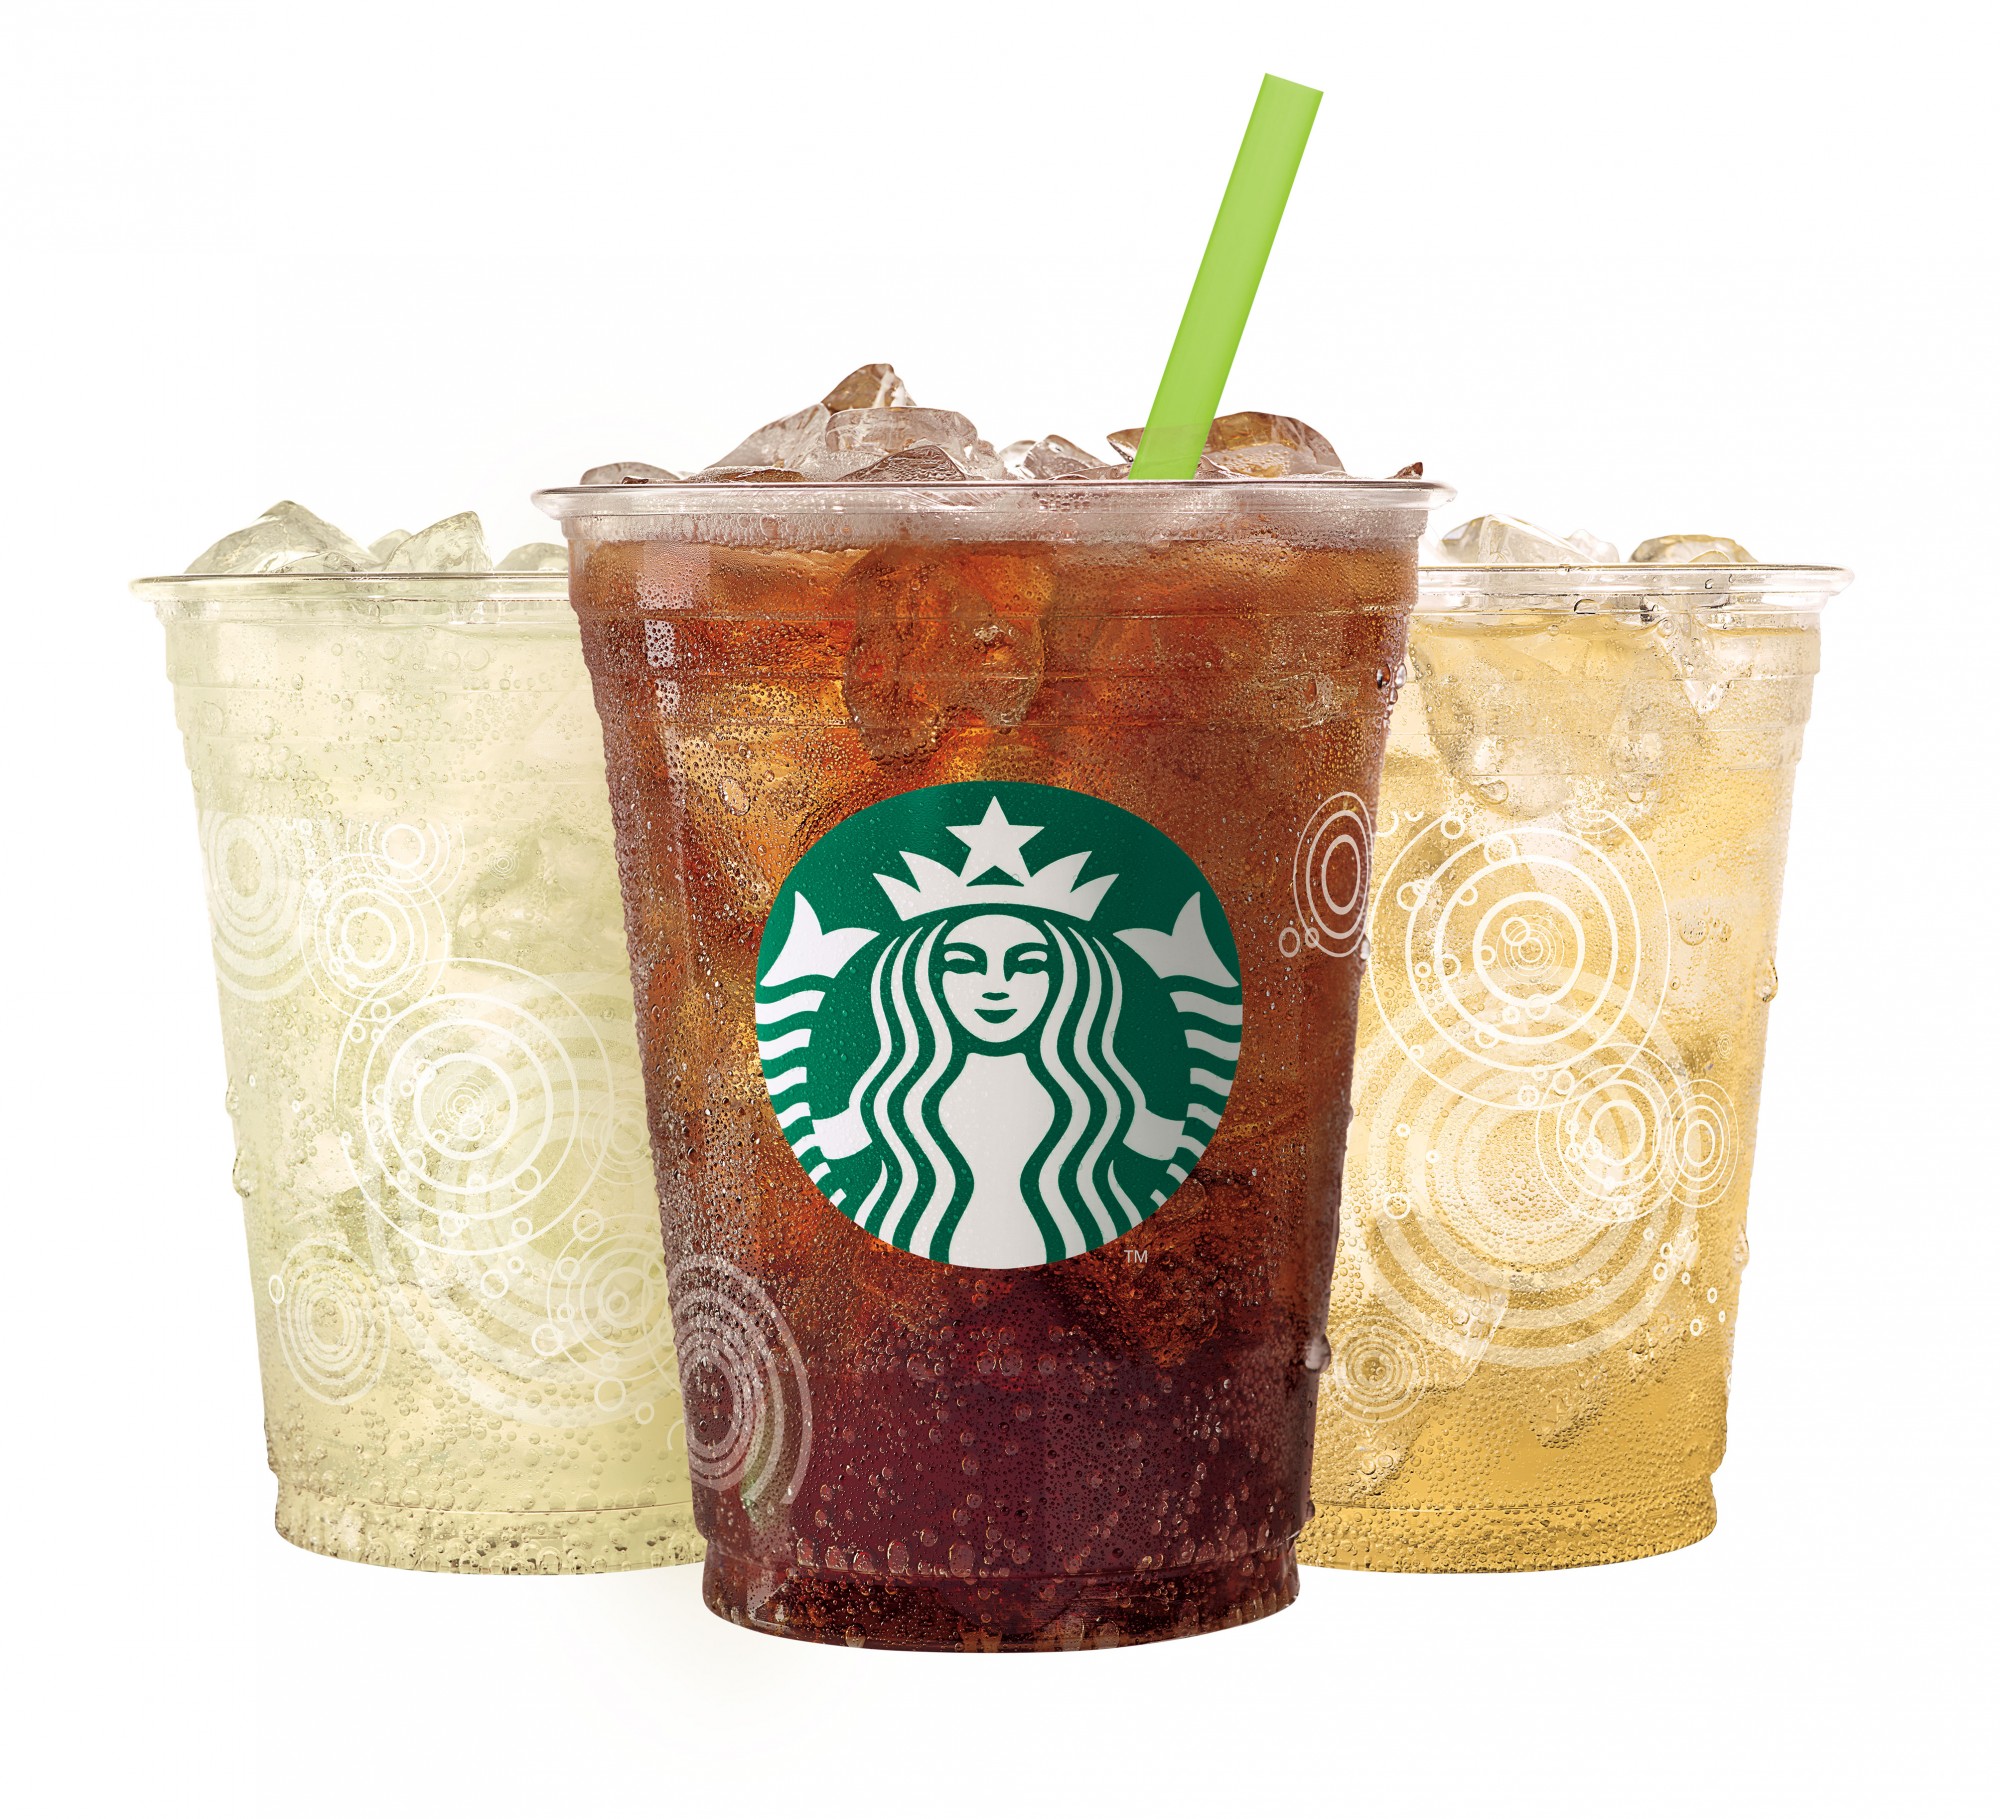 Starbucks adds made-to-order sodas to menus in Virginia (Video)